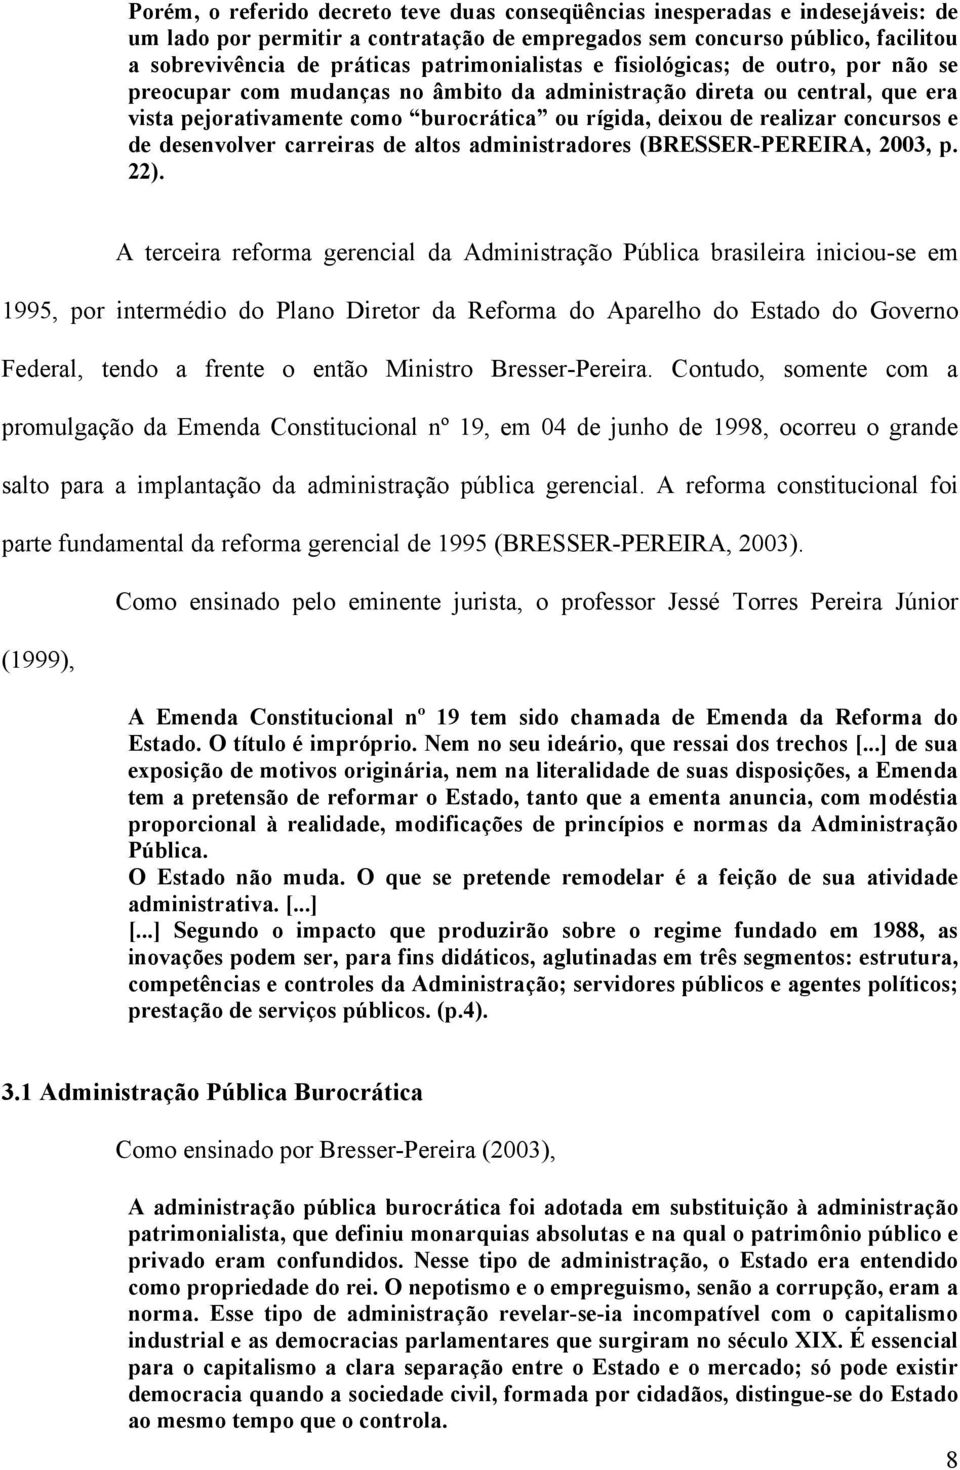 concursos e de desenvolver carreiras de altos administradores (BRESSER-PEREIRA, 2003, p. 22).